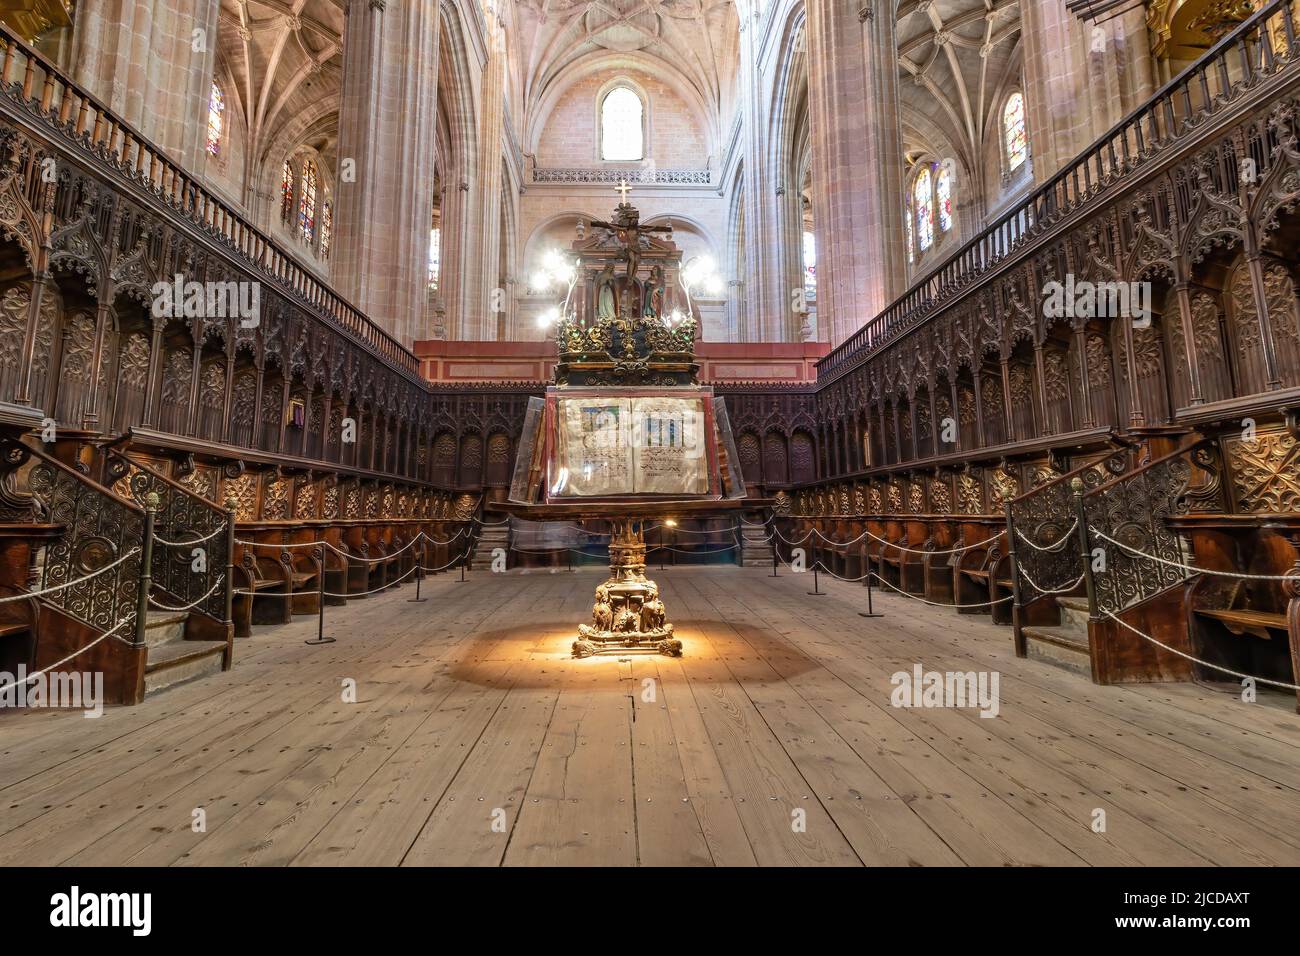 Segovia, España - 9 de octubre de 2017: Coro de madera de la Catedral de Segovia Foto de stock